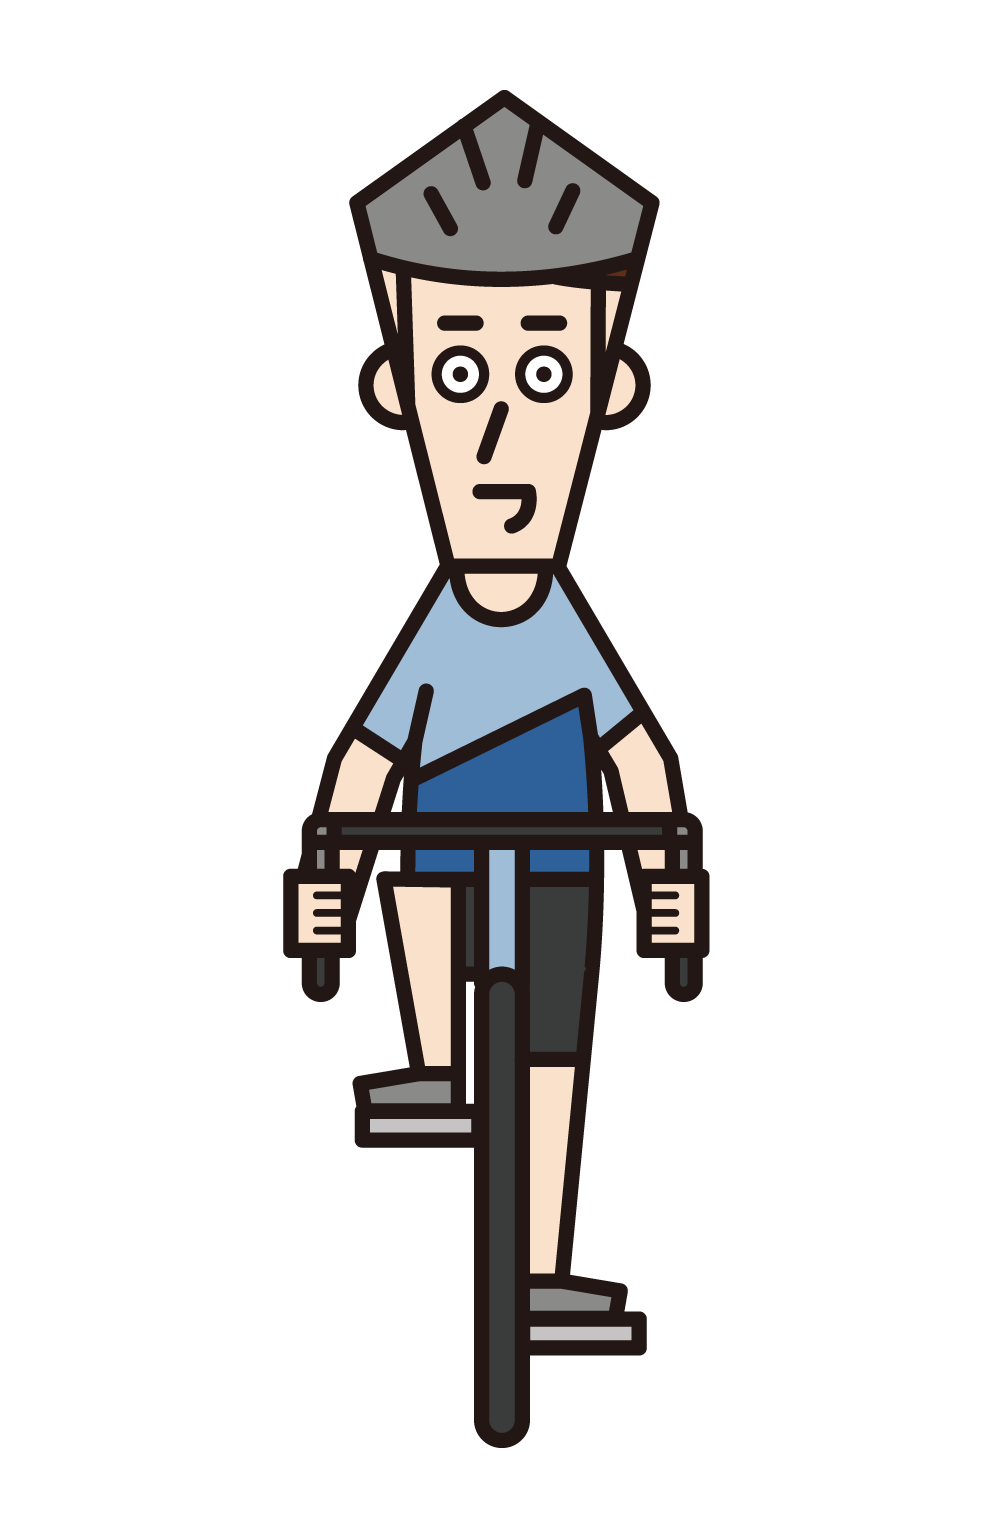 Illustration of a man riding a road bike